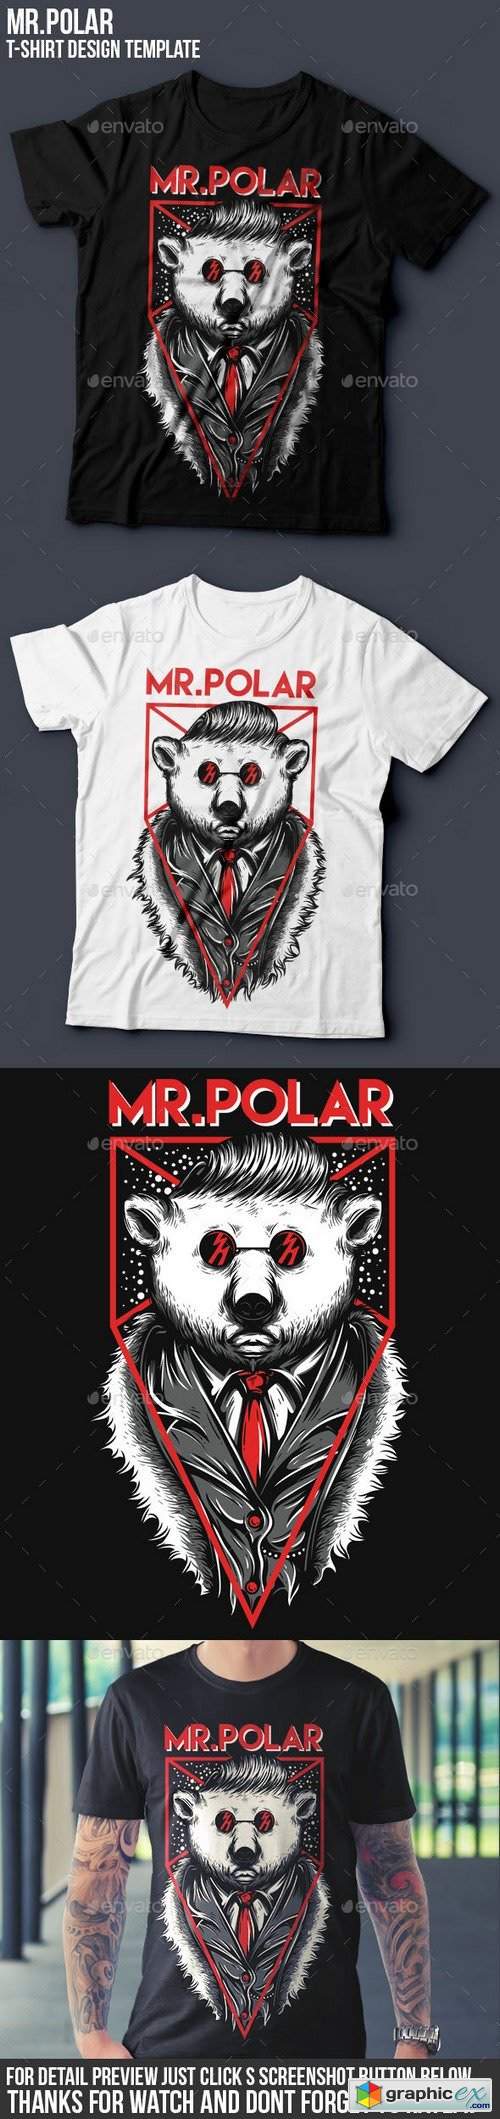 Mr.Polar T-Shirt Design